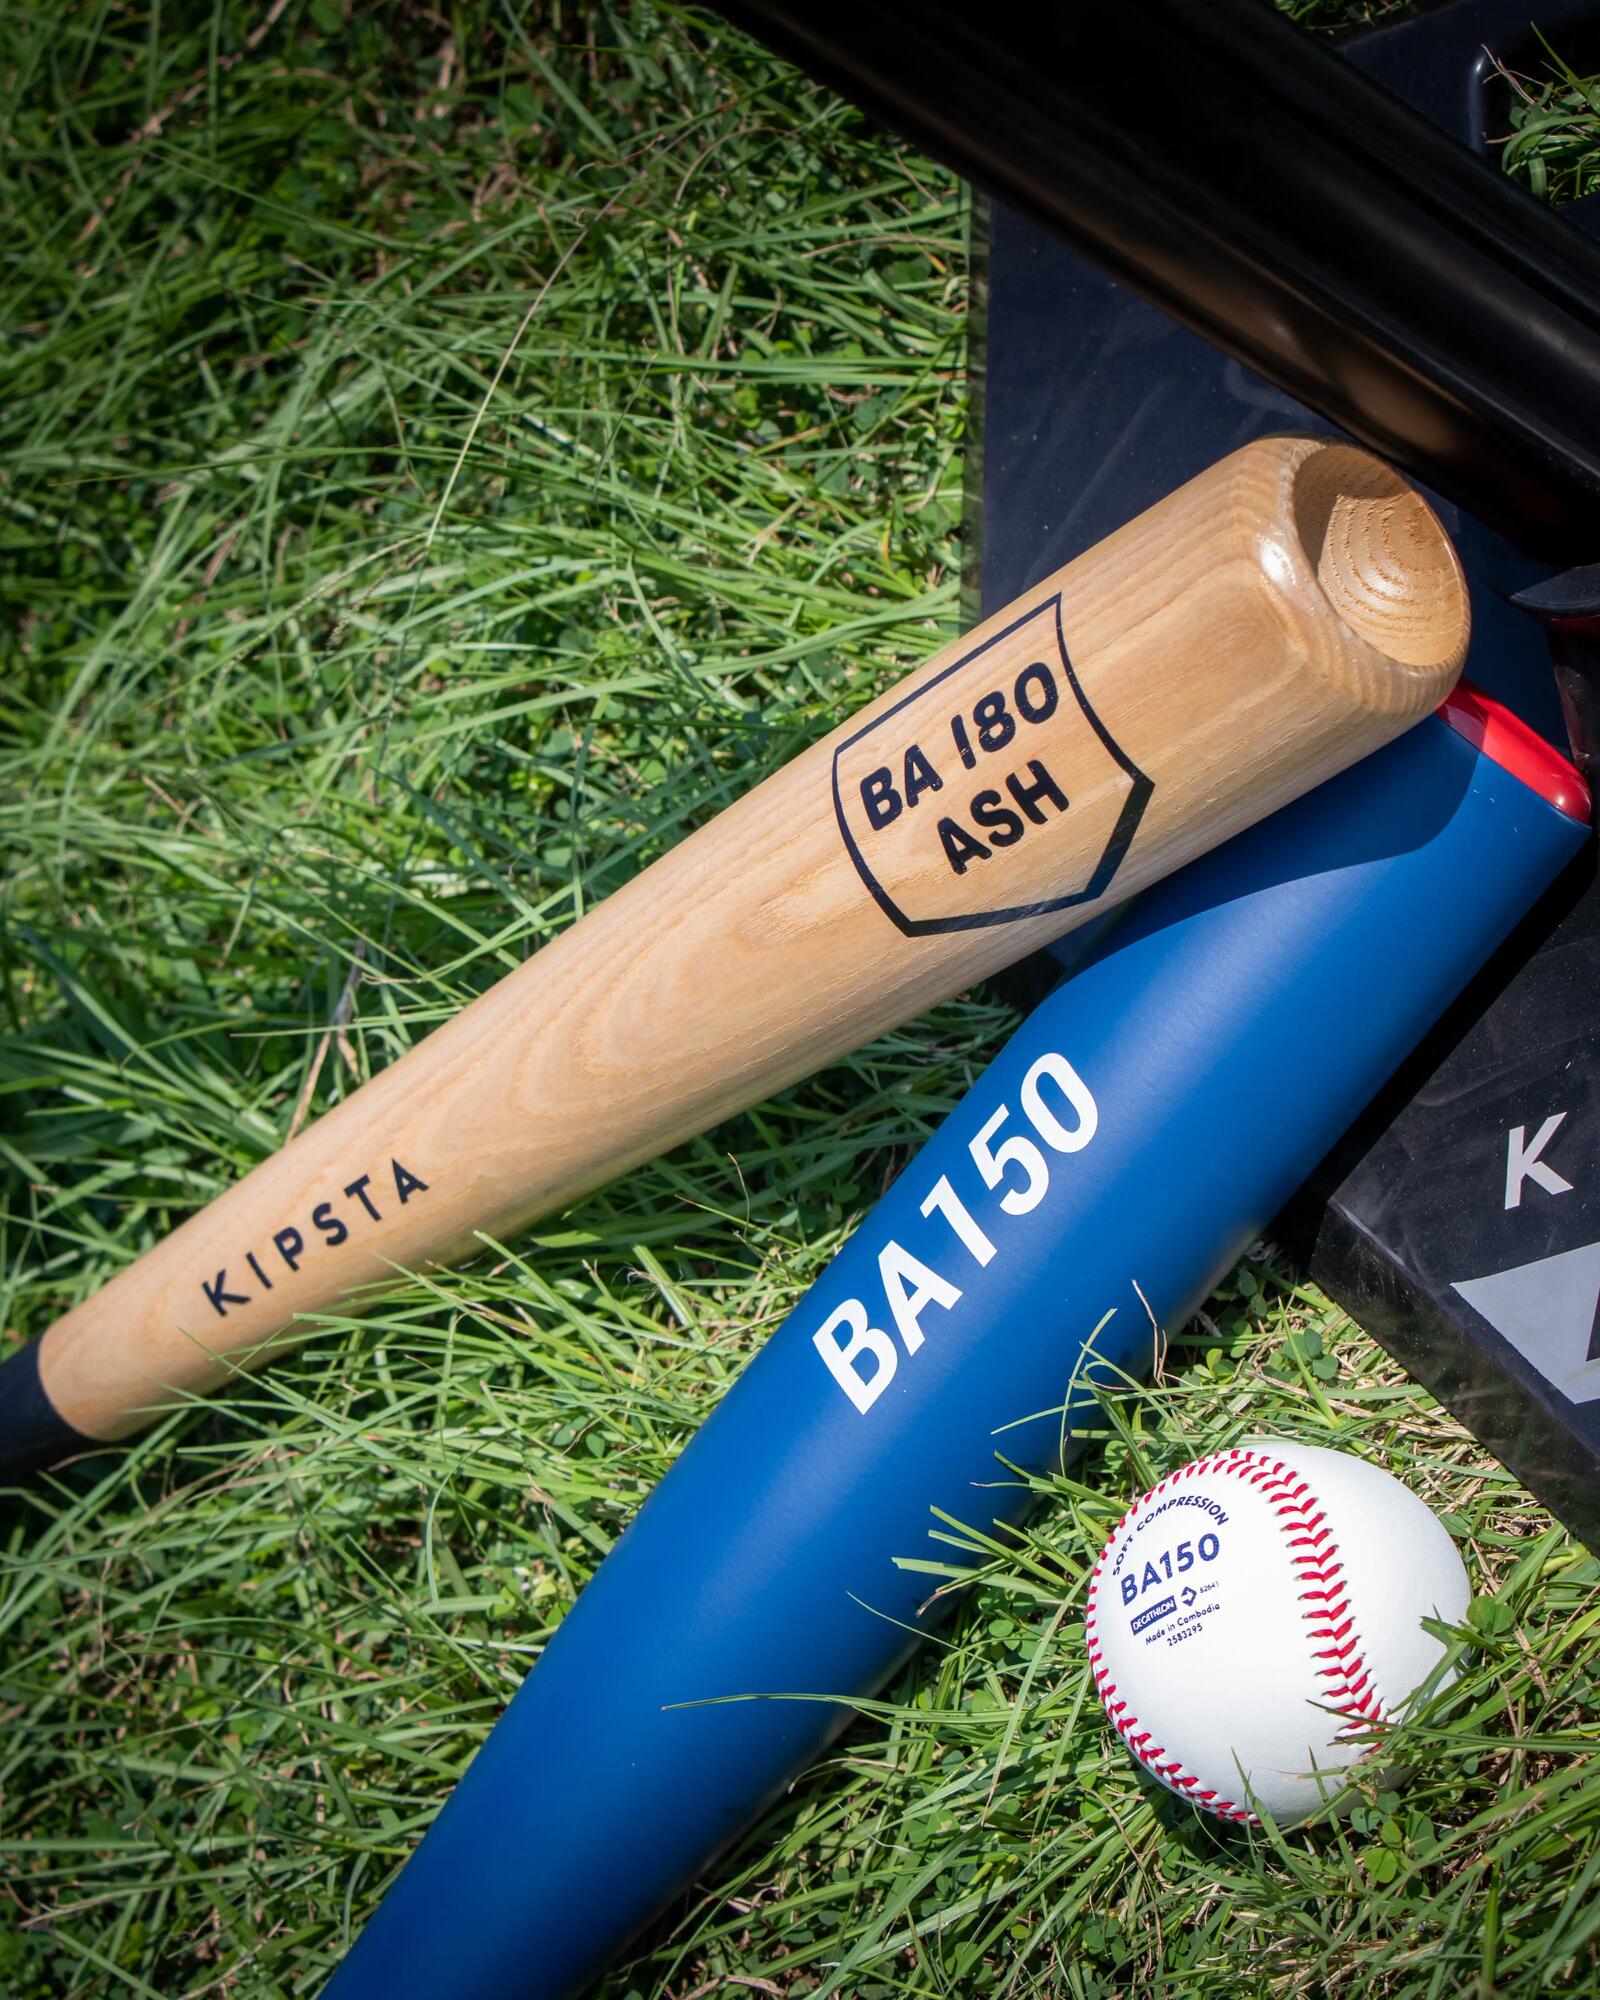 Equipment essentials for baseball